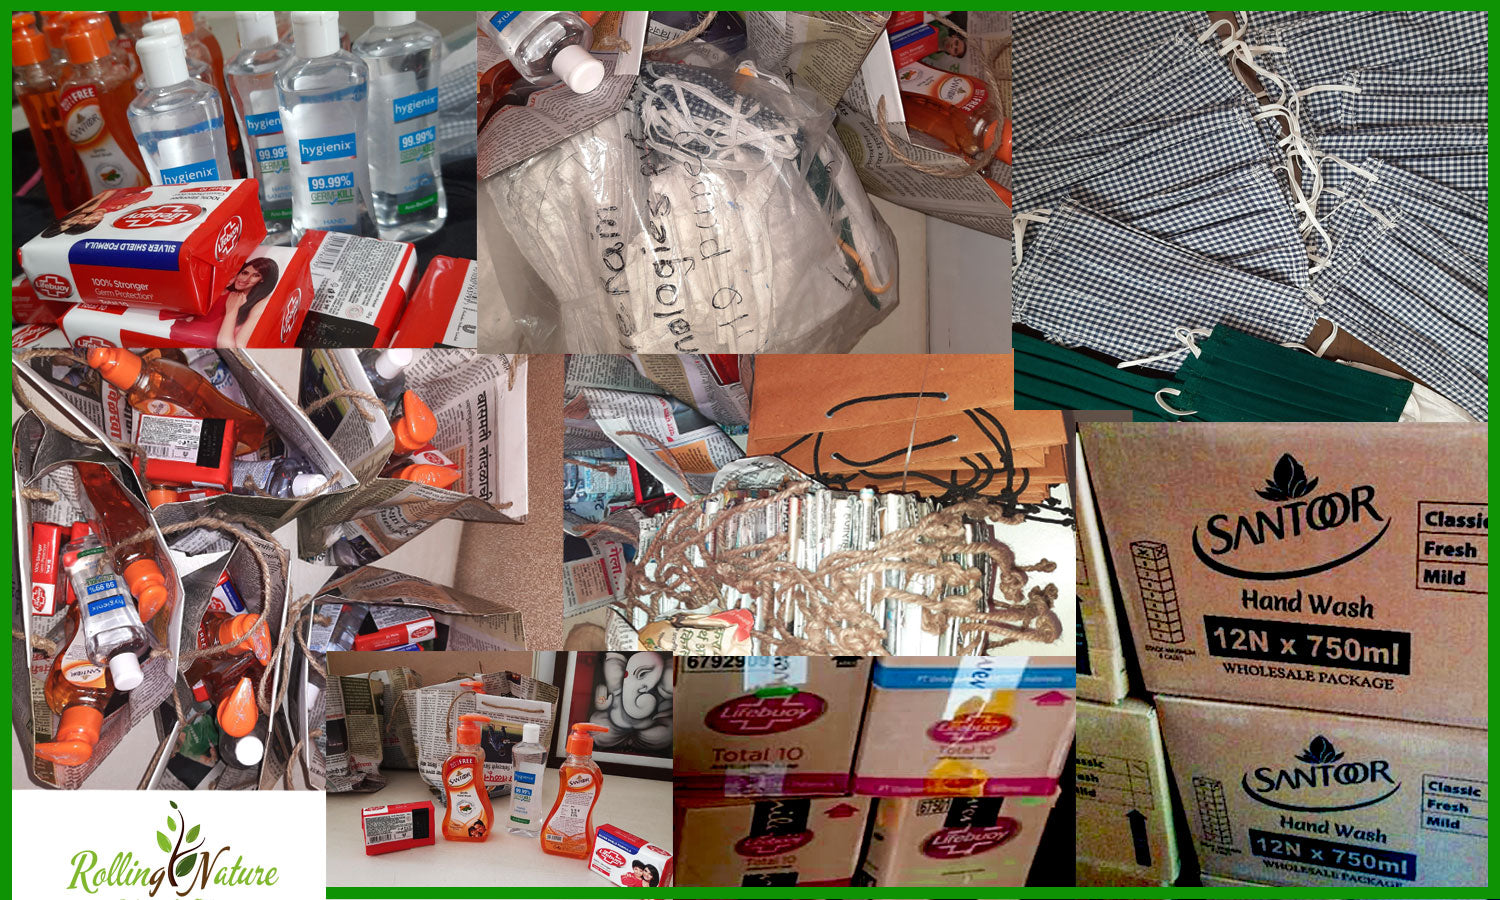 Rolling Nature, RollingNature, Hygiene Kits, Plants, Distribution, Corona, Covid, Help, Humanity, Donation, 2020, Mask, Sanitizer, Environment